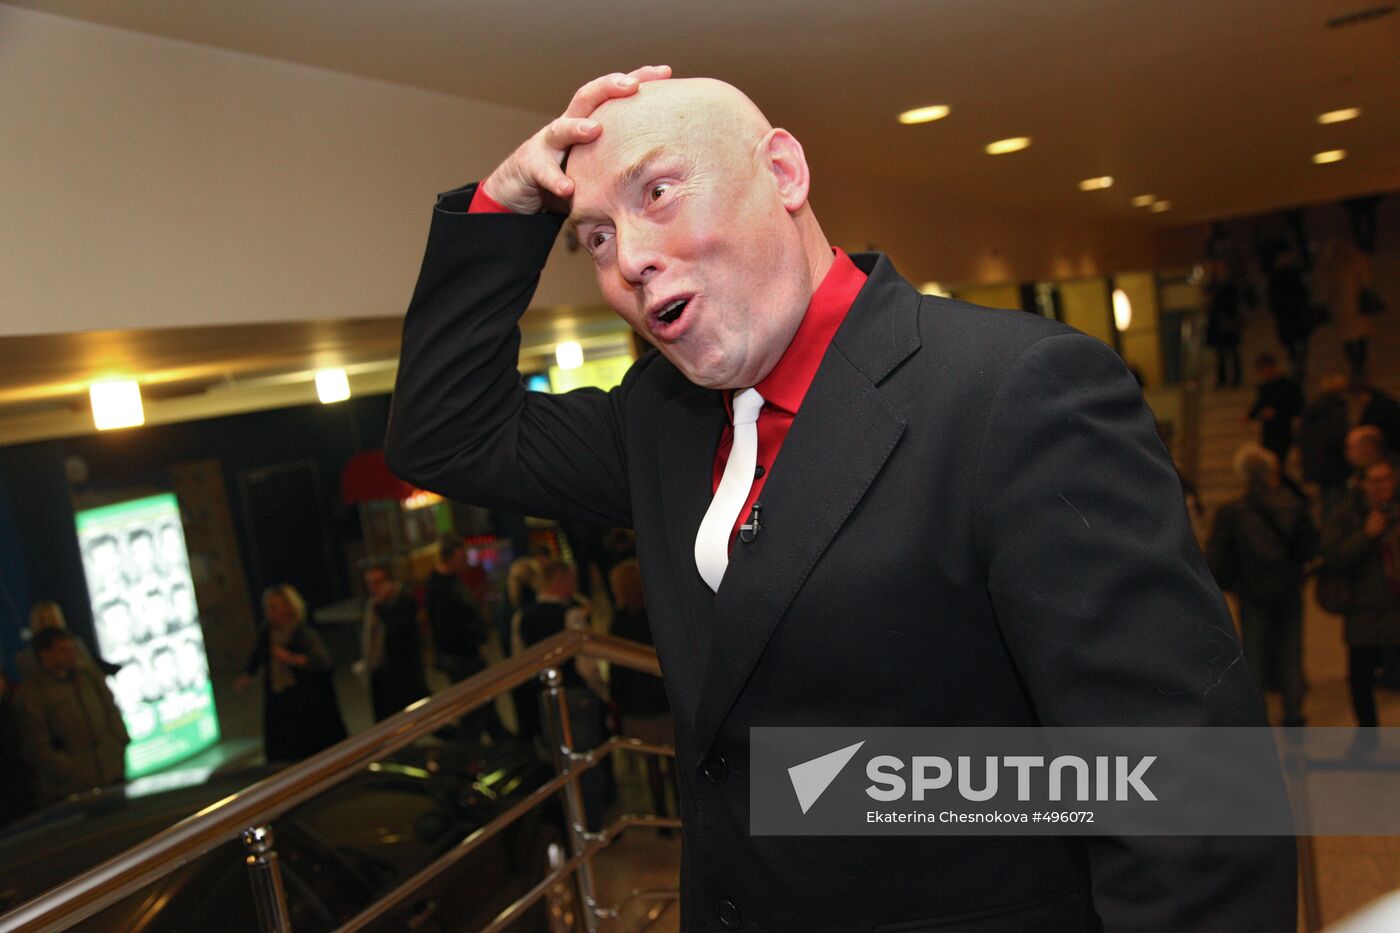 Viktor Sukhorukov attends Passenger premiere